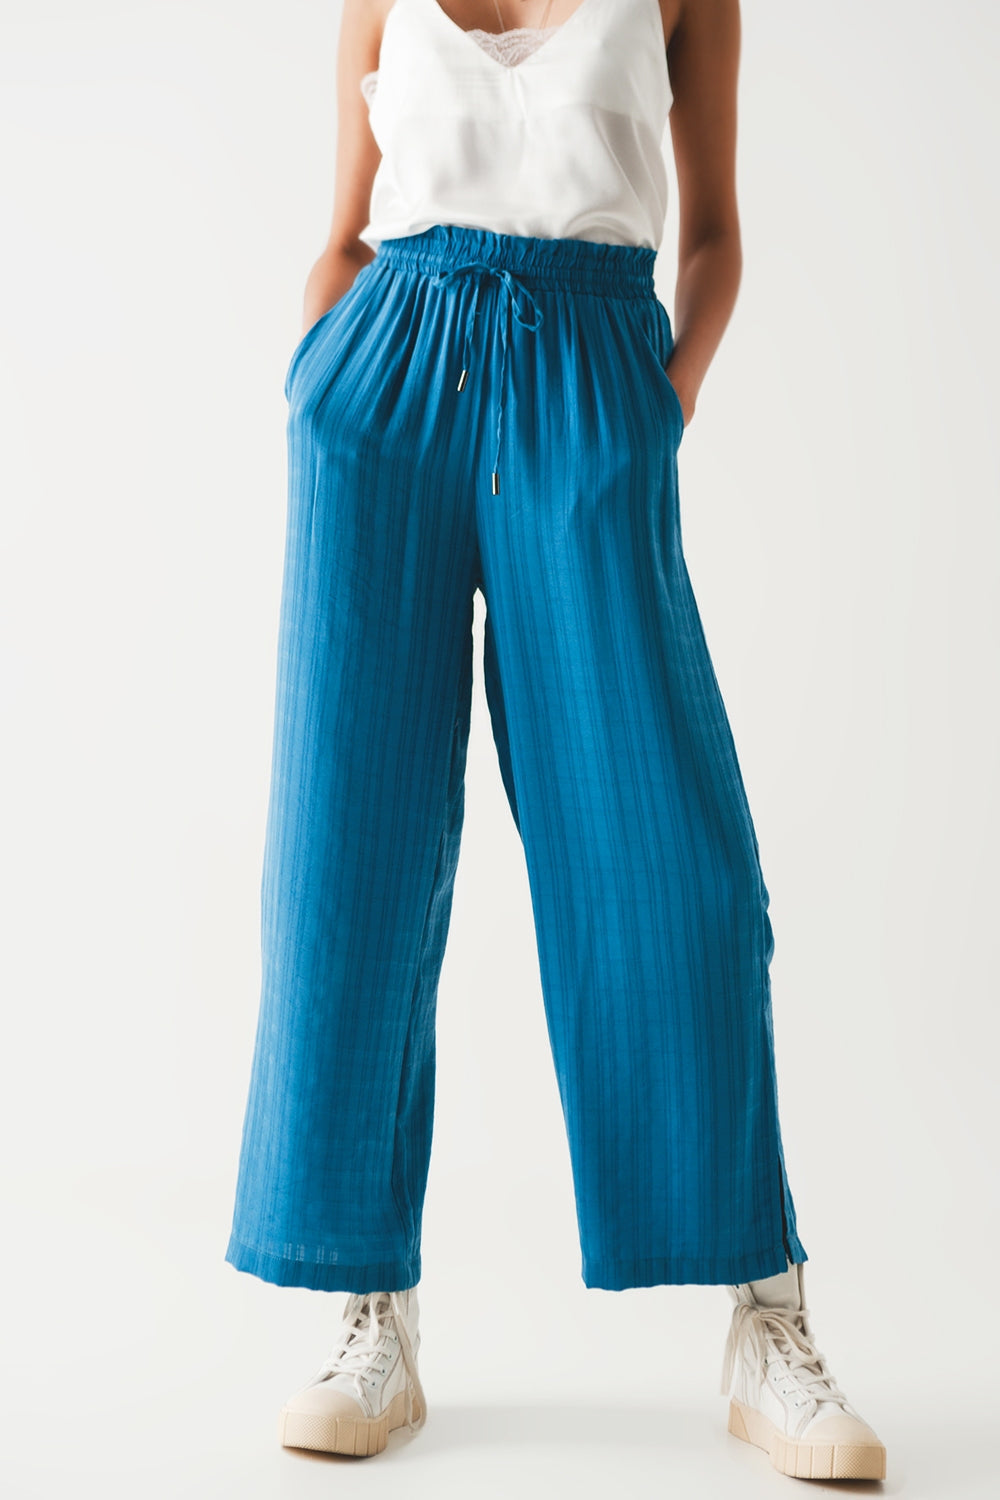 RM - Wide Leg Drawstring Pants in Blue